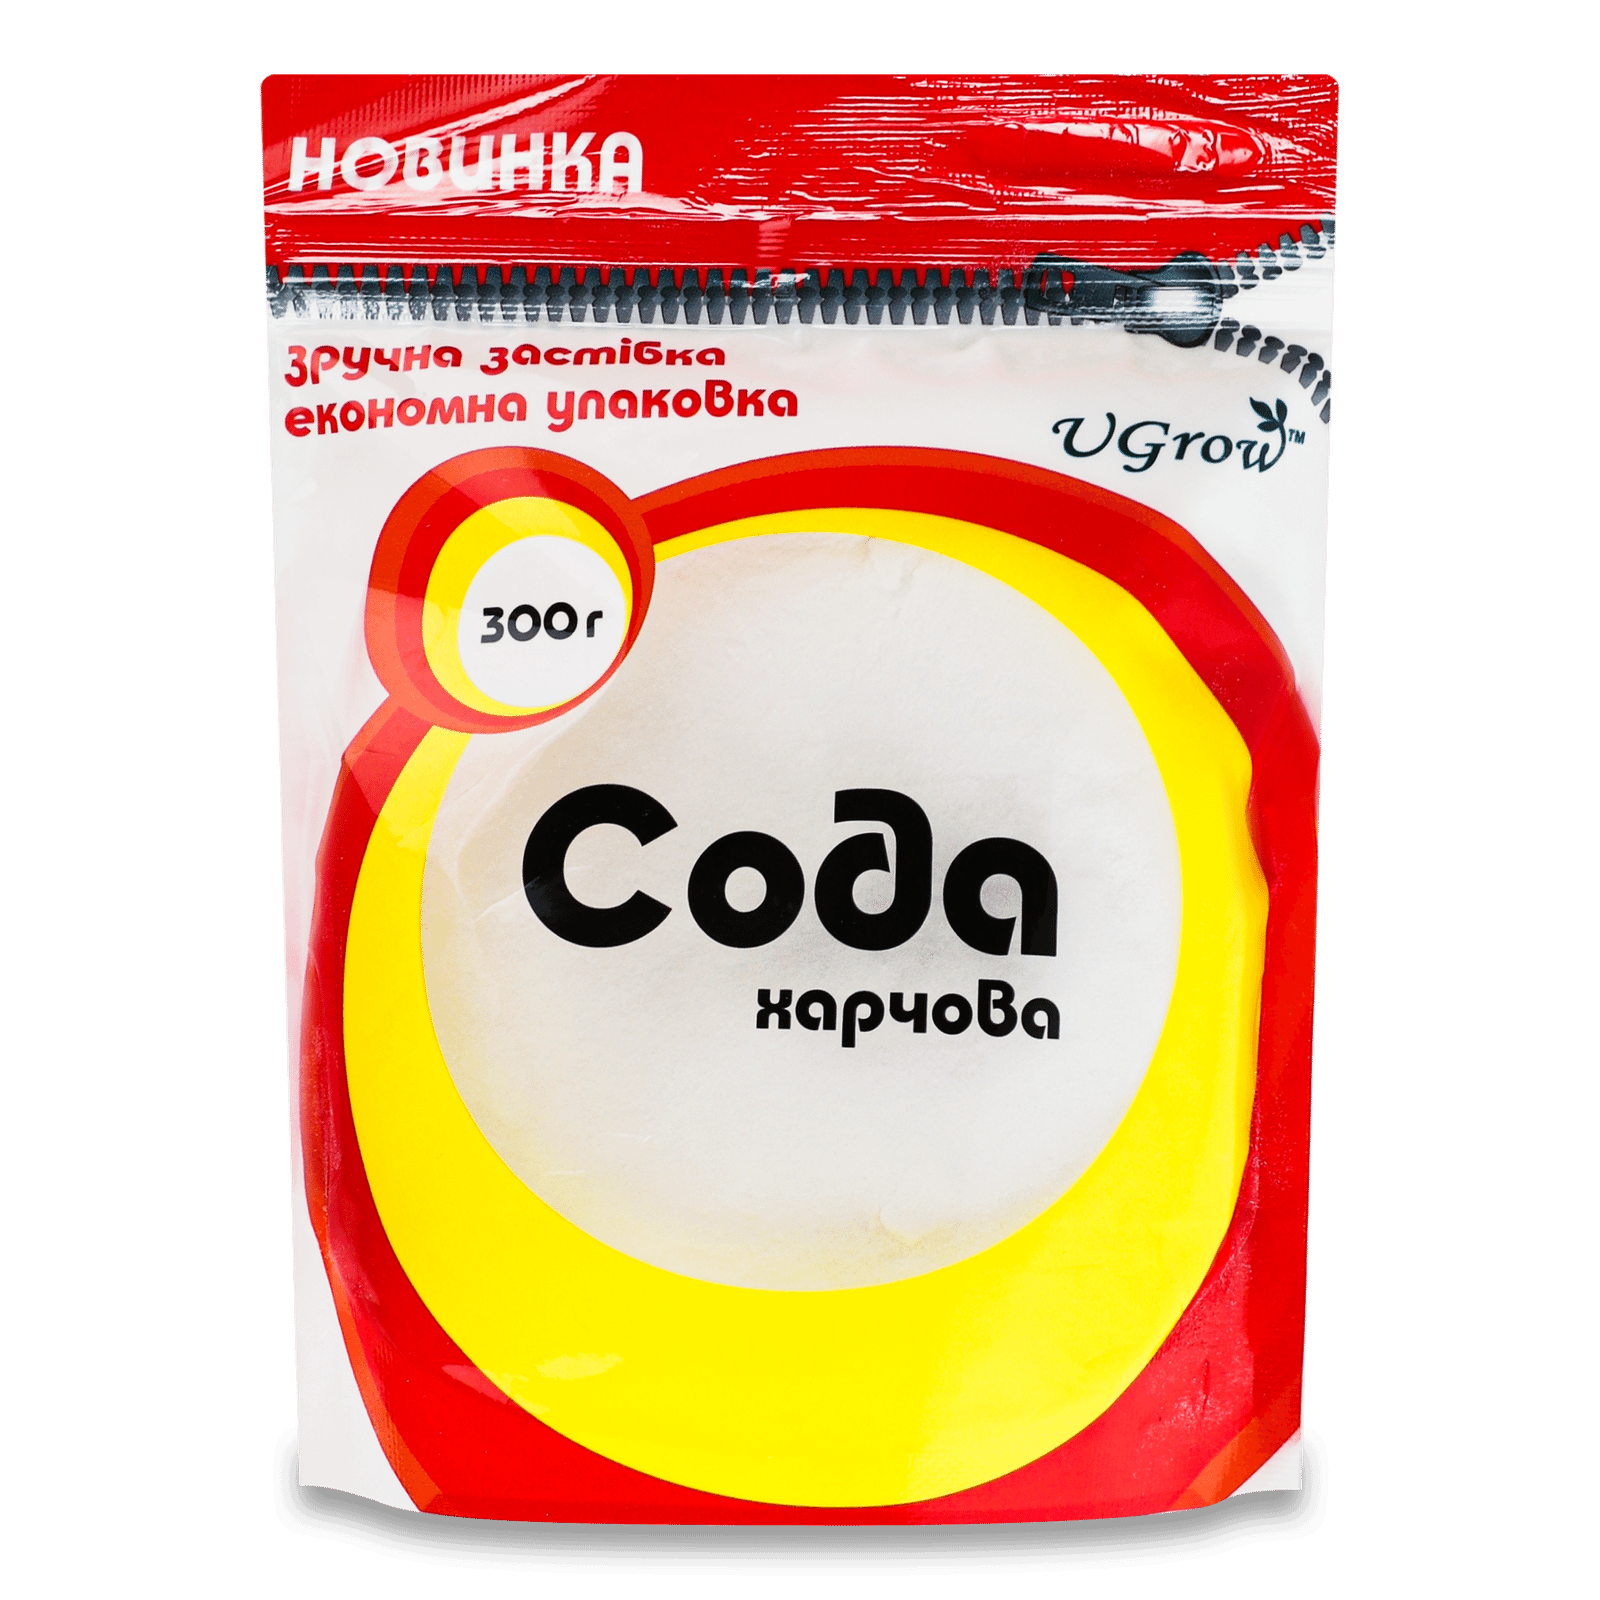 Сода Ugrow харчова - 1